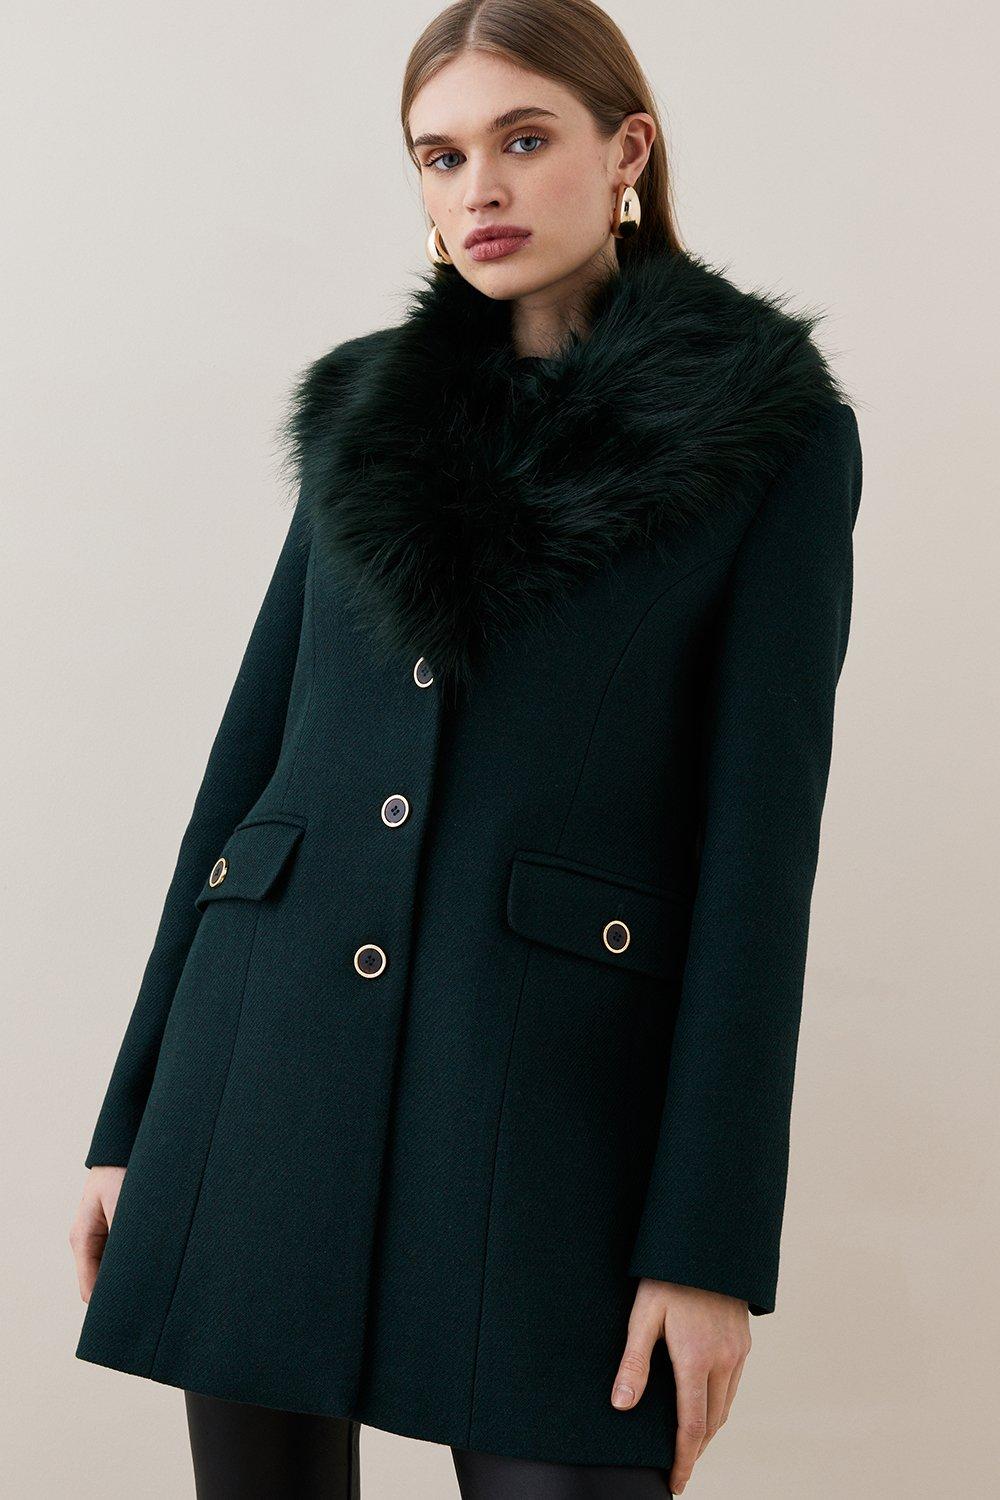 Jackets & Coats | Italian Wool Mix Faux Fur Collar Short Coat | KarenMillen